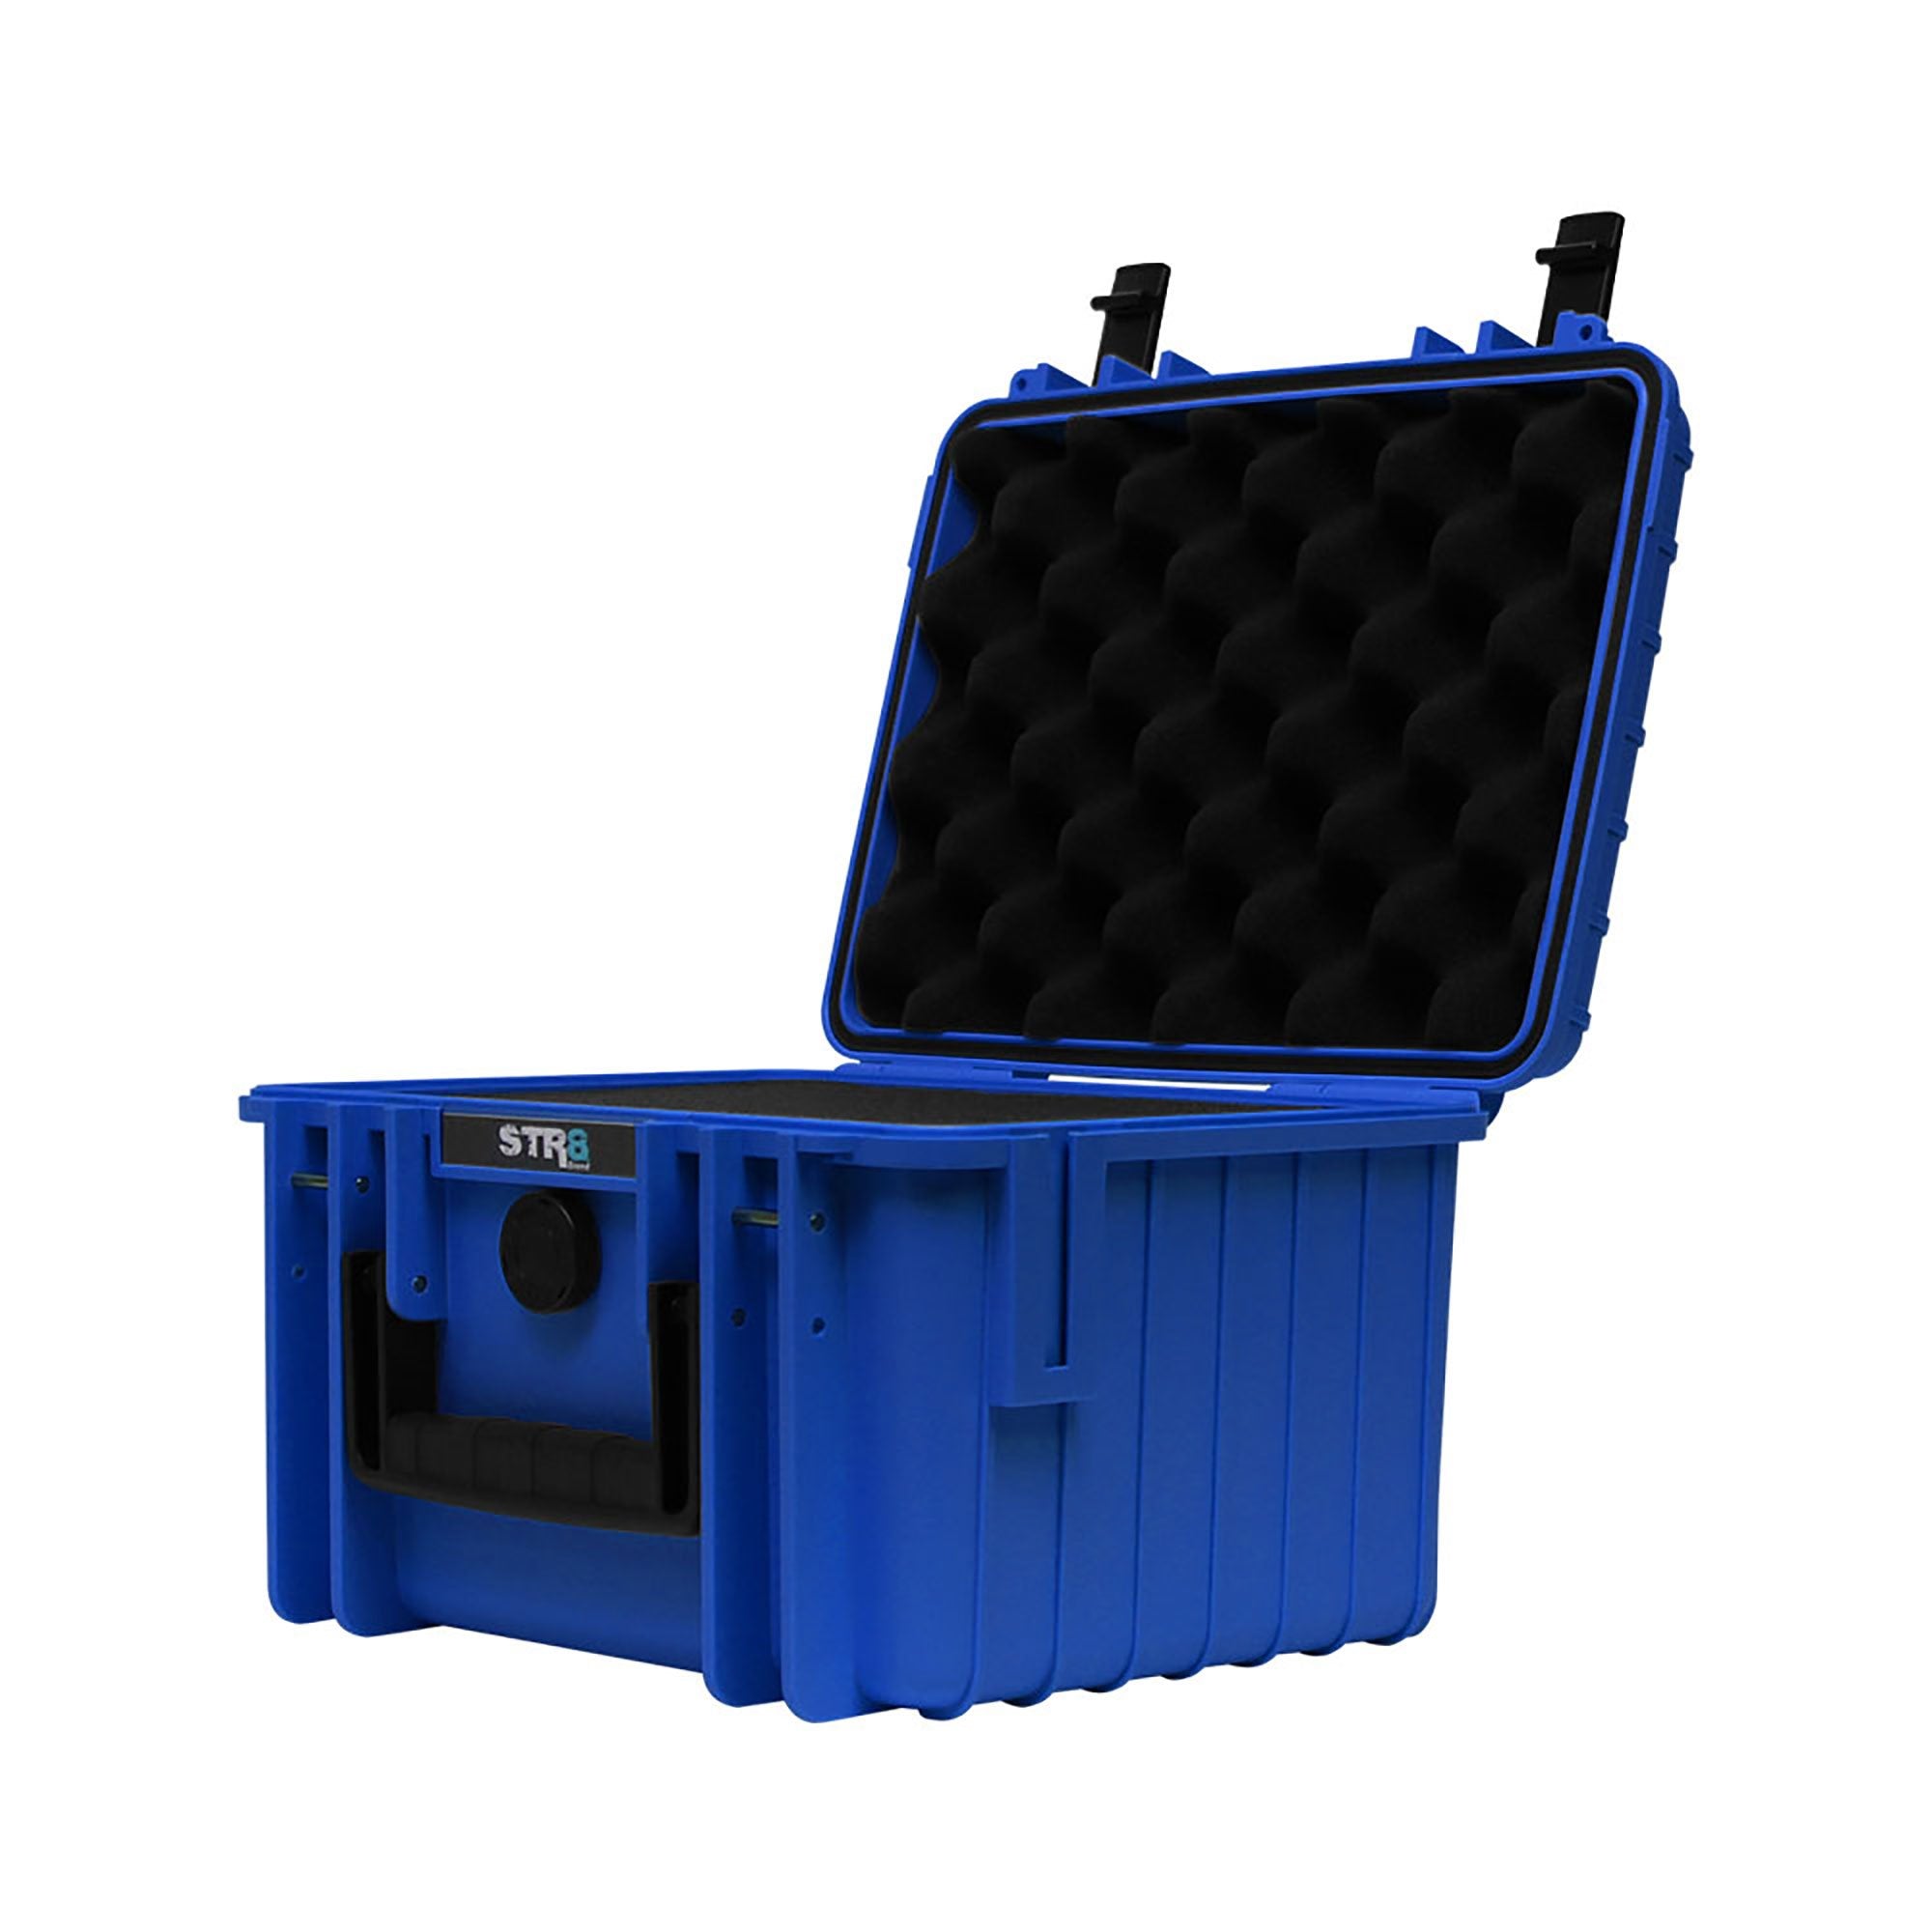 10" 3 Layer Cobalt Blue STR8 Case - 2